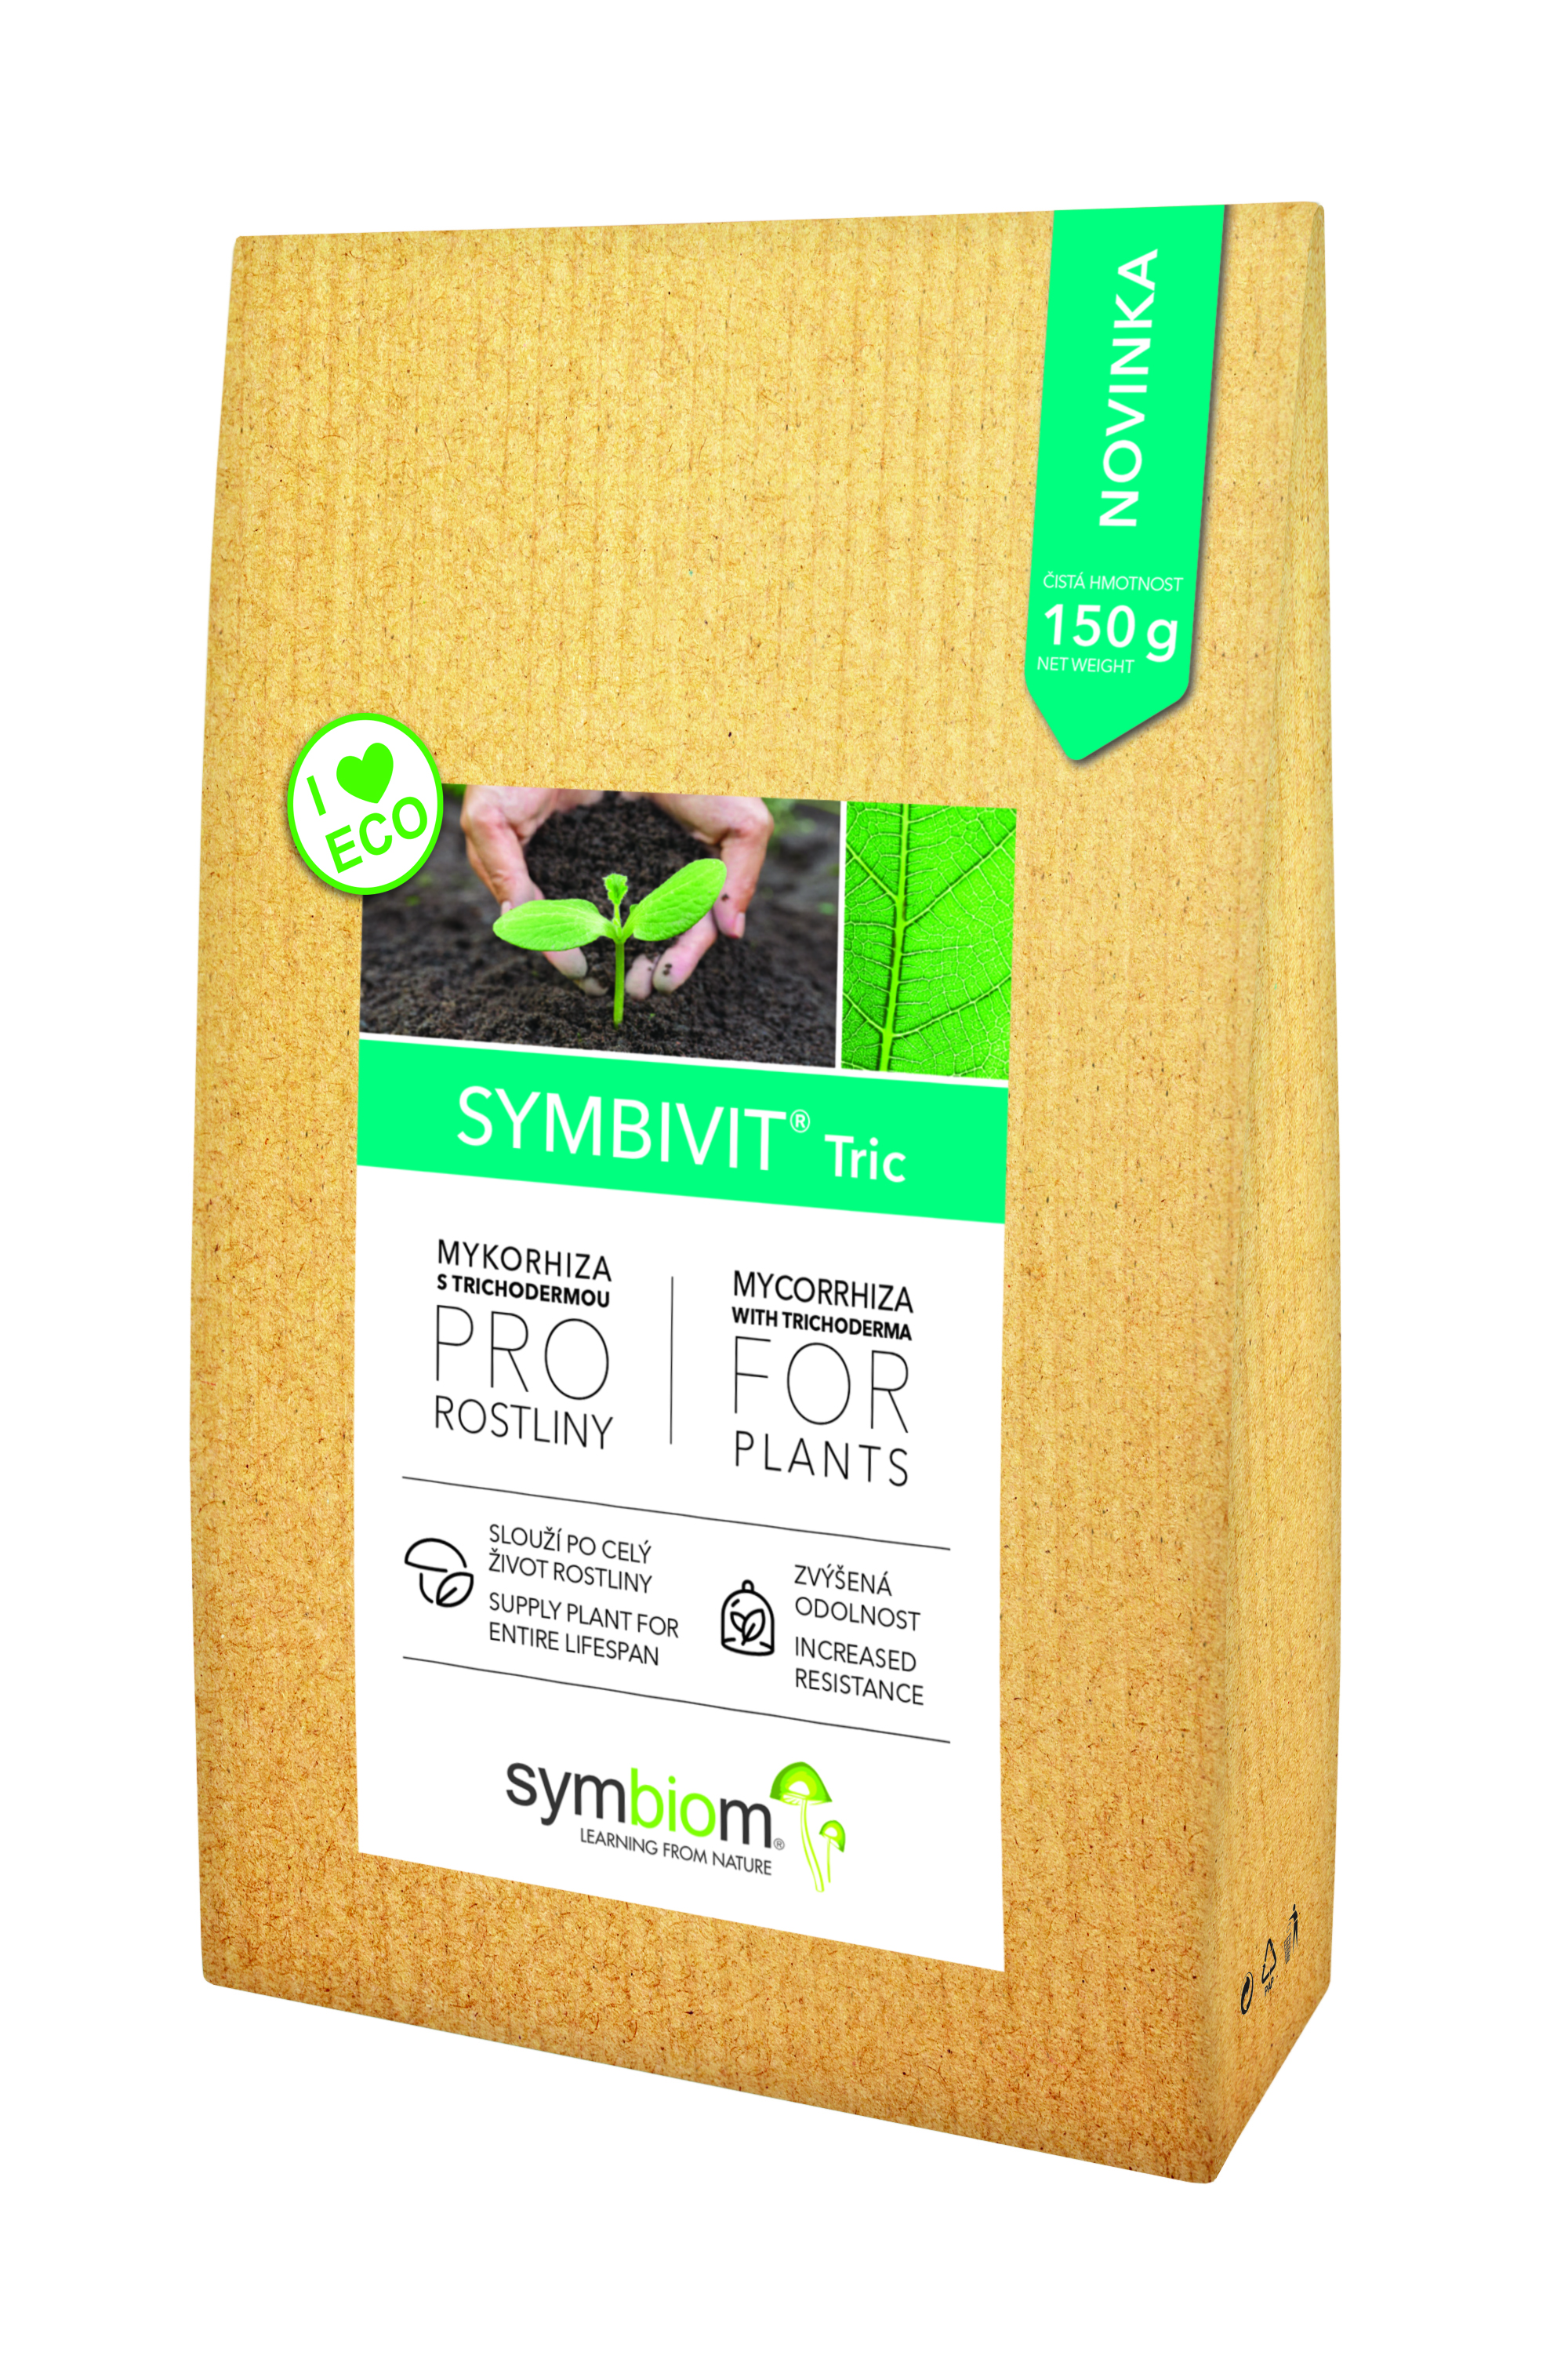 Symbivit Tric 150 g